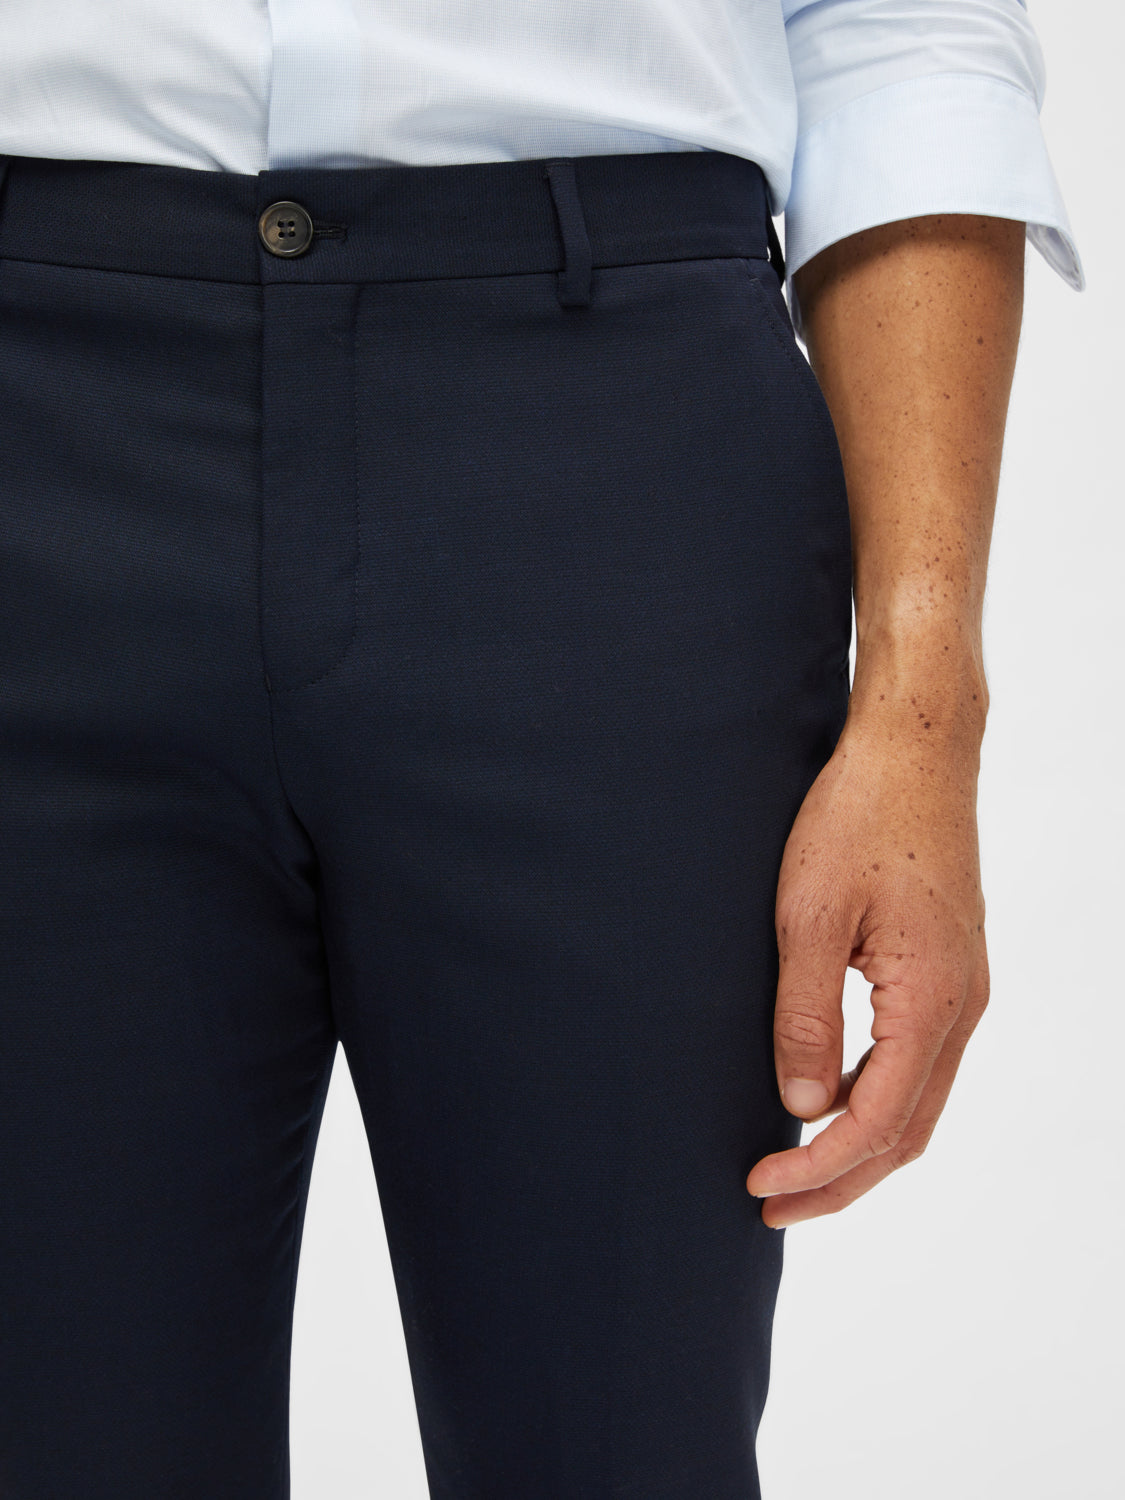 SELECTED HOMME - SLIM-NEIL Pants - Navy Blazer